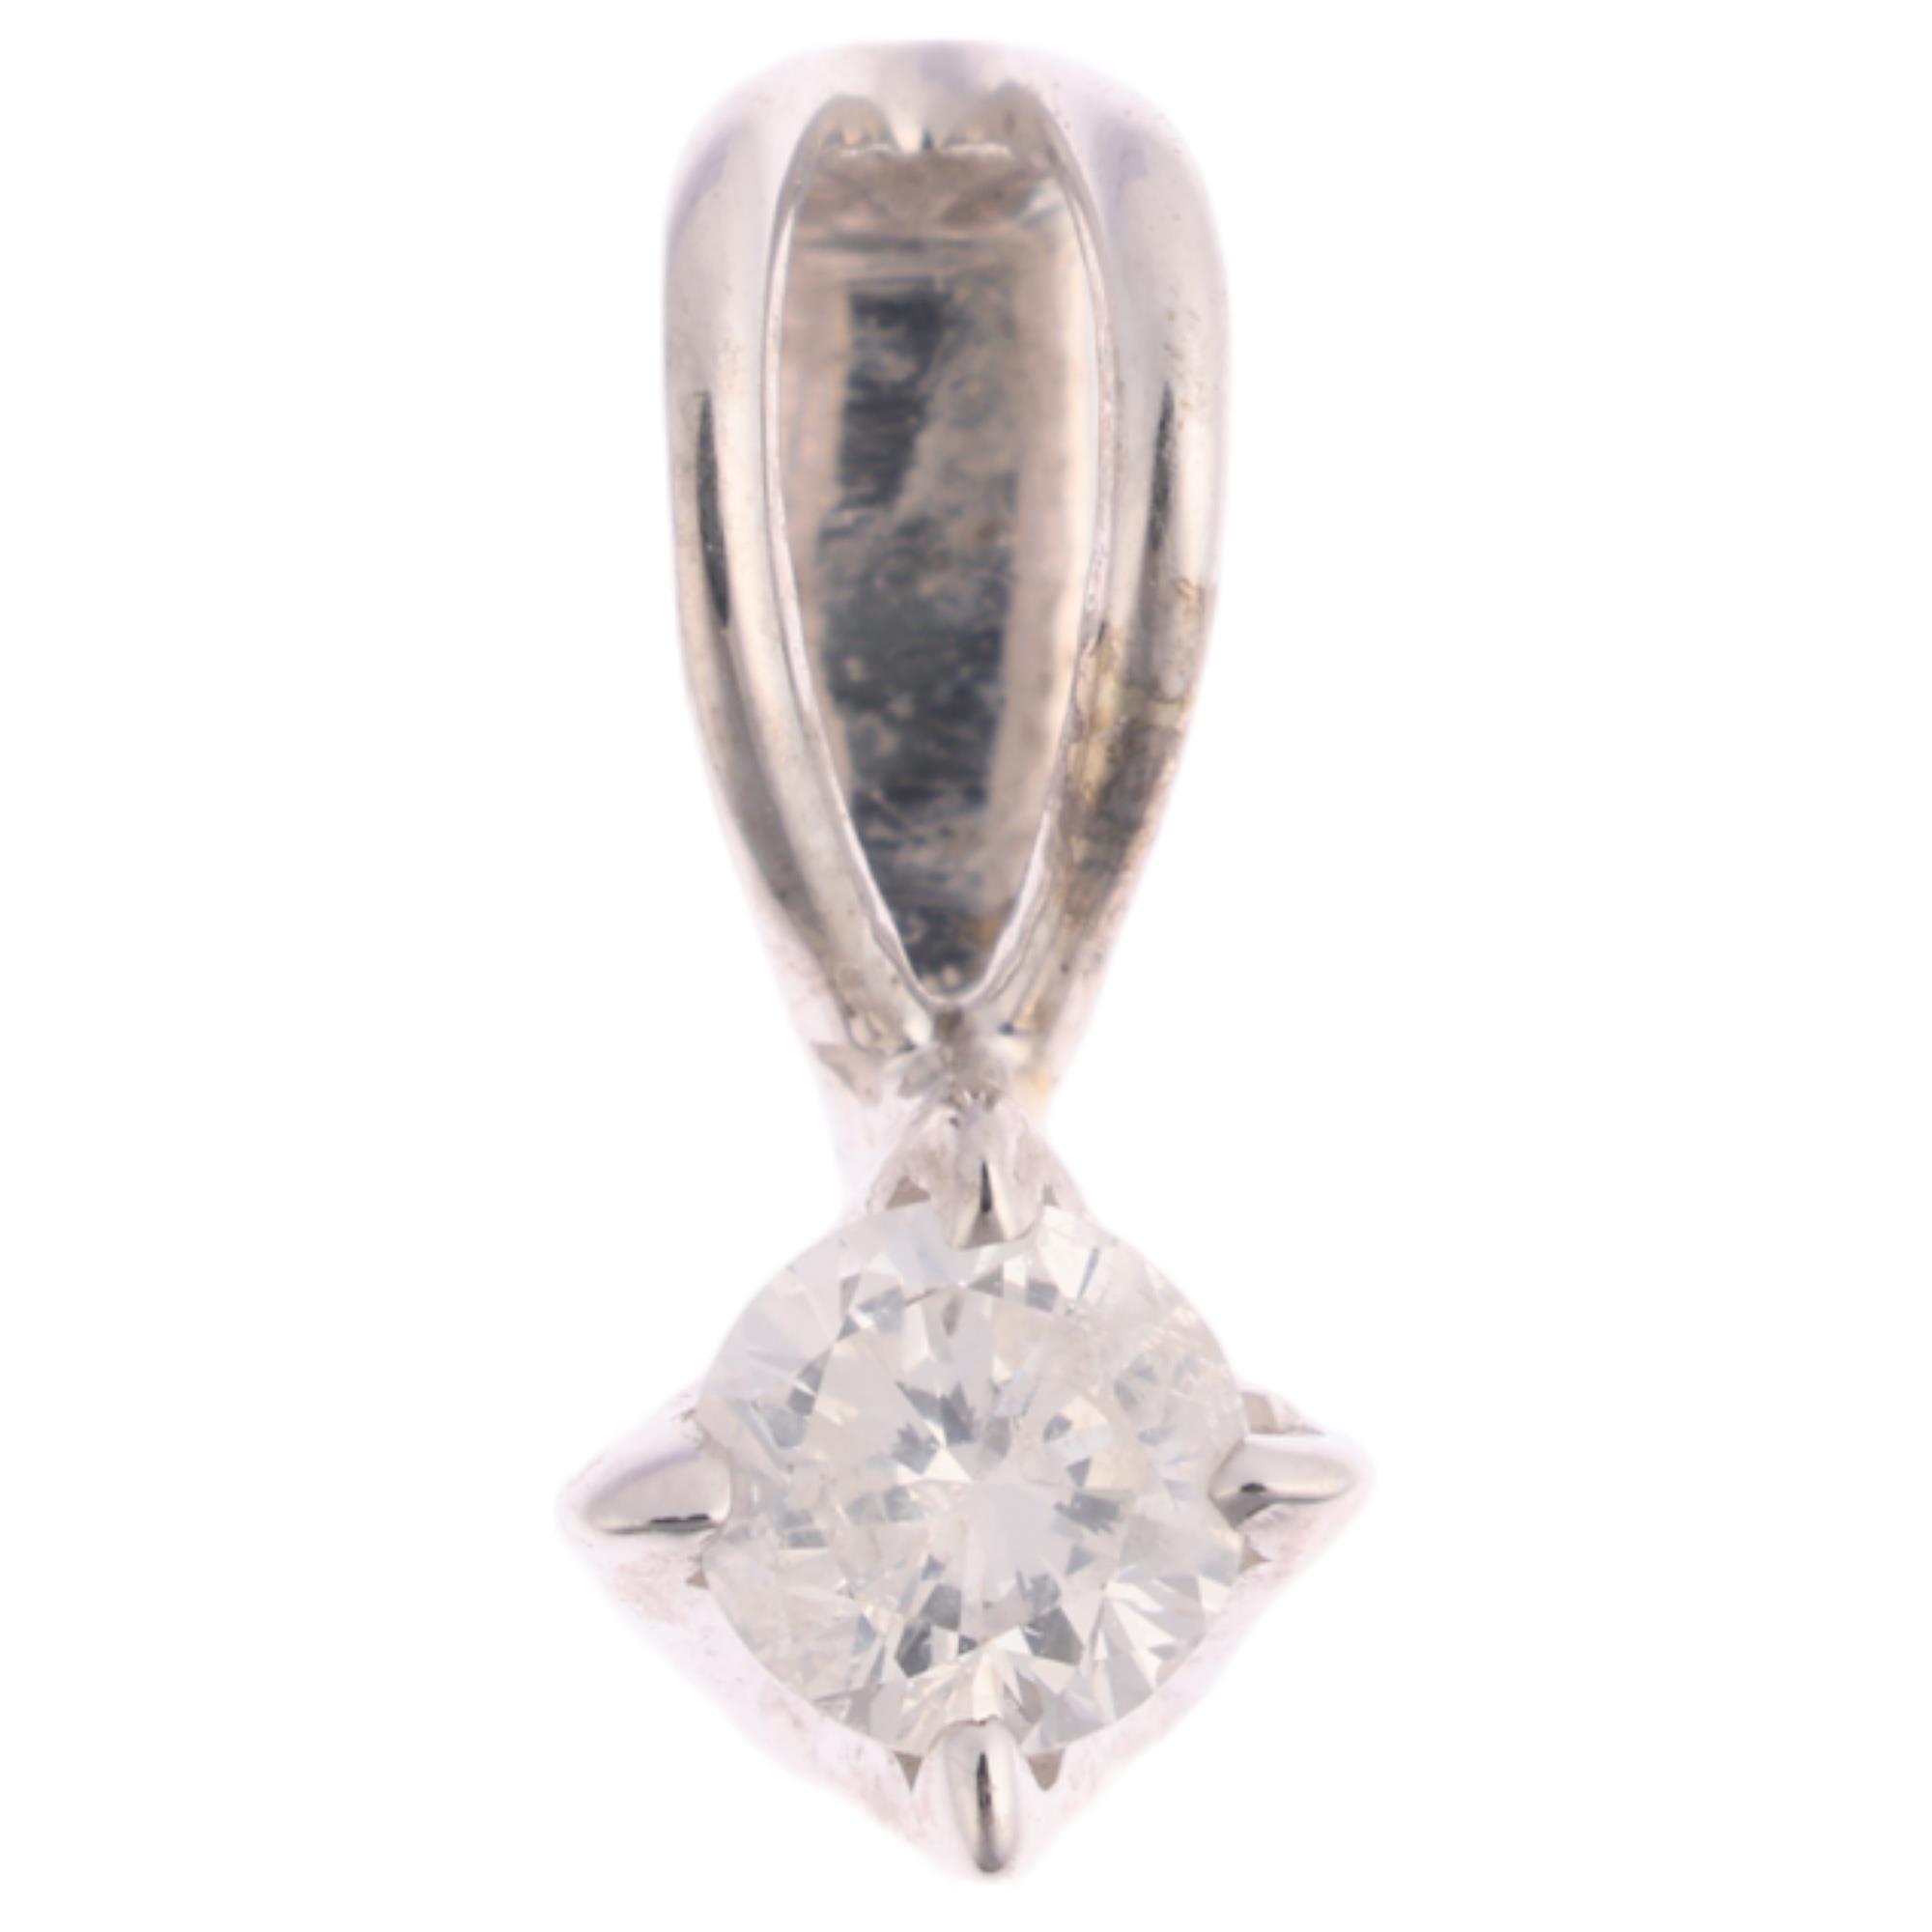 A 9ct white gold 0.15ct solitaire diamond pendant, claw set with modern round brilliant-cut diamond,